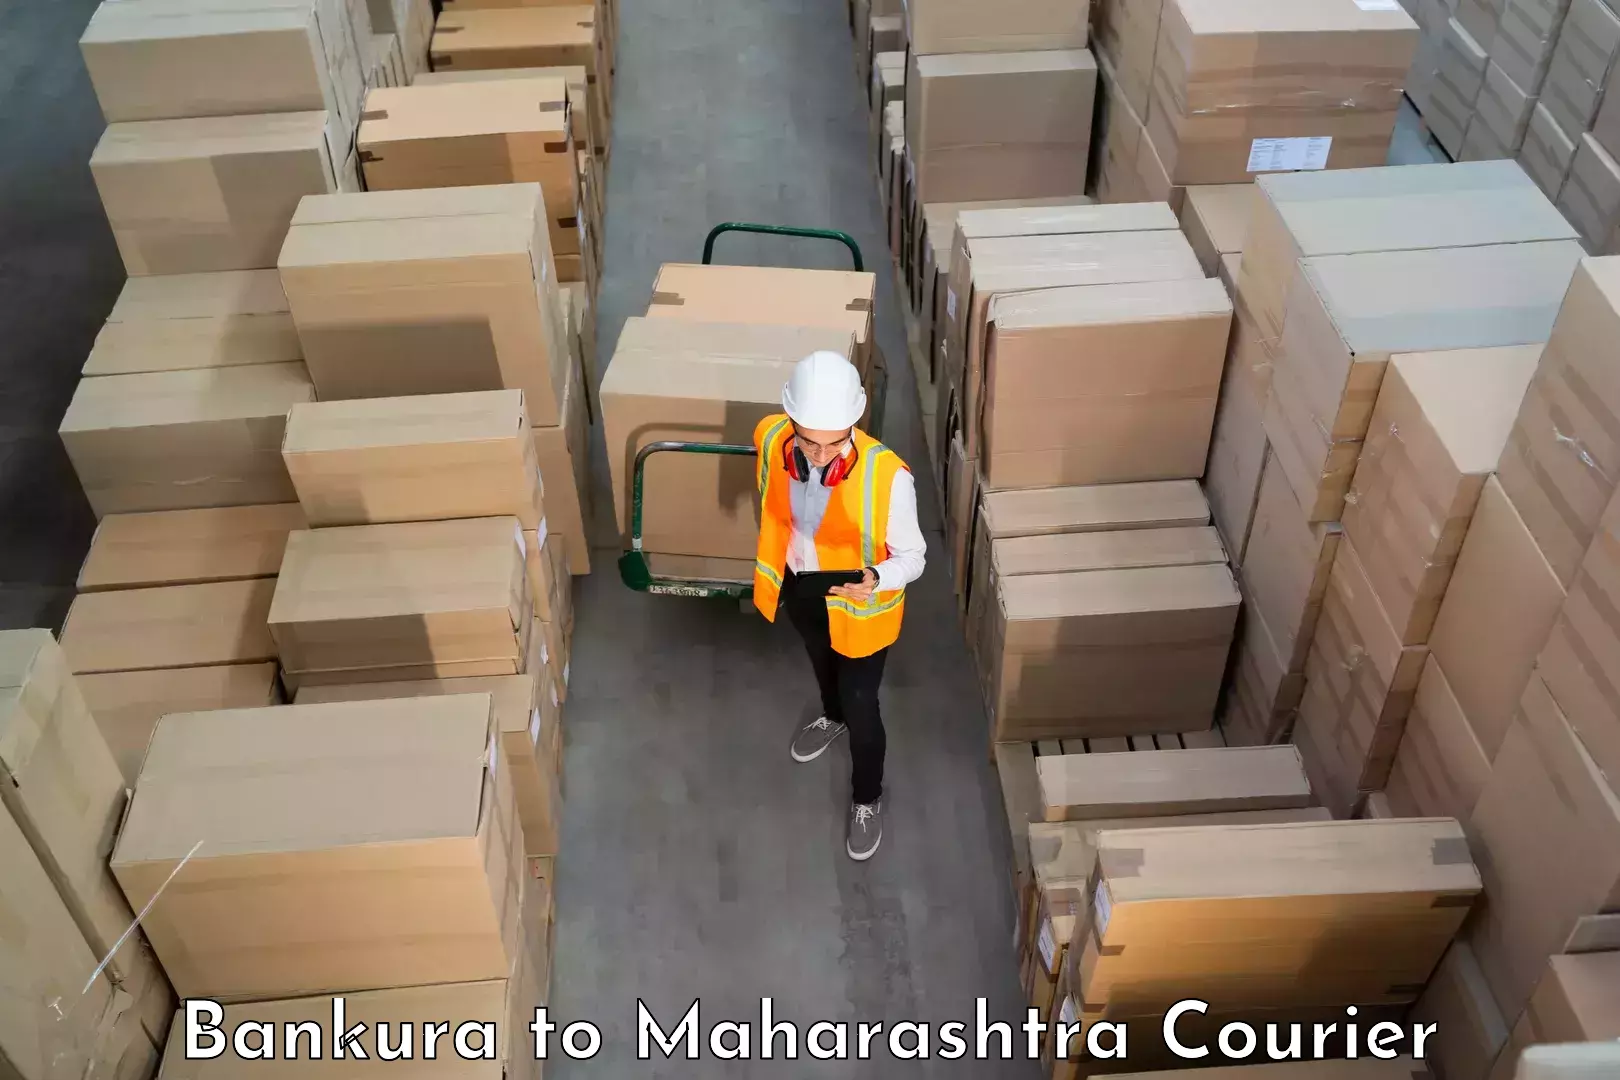 Furniture moving specialists Bankura to Shrirampur